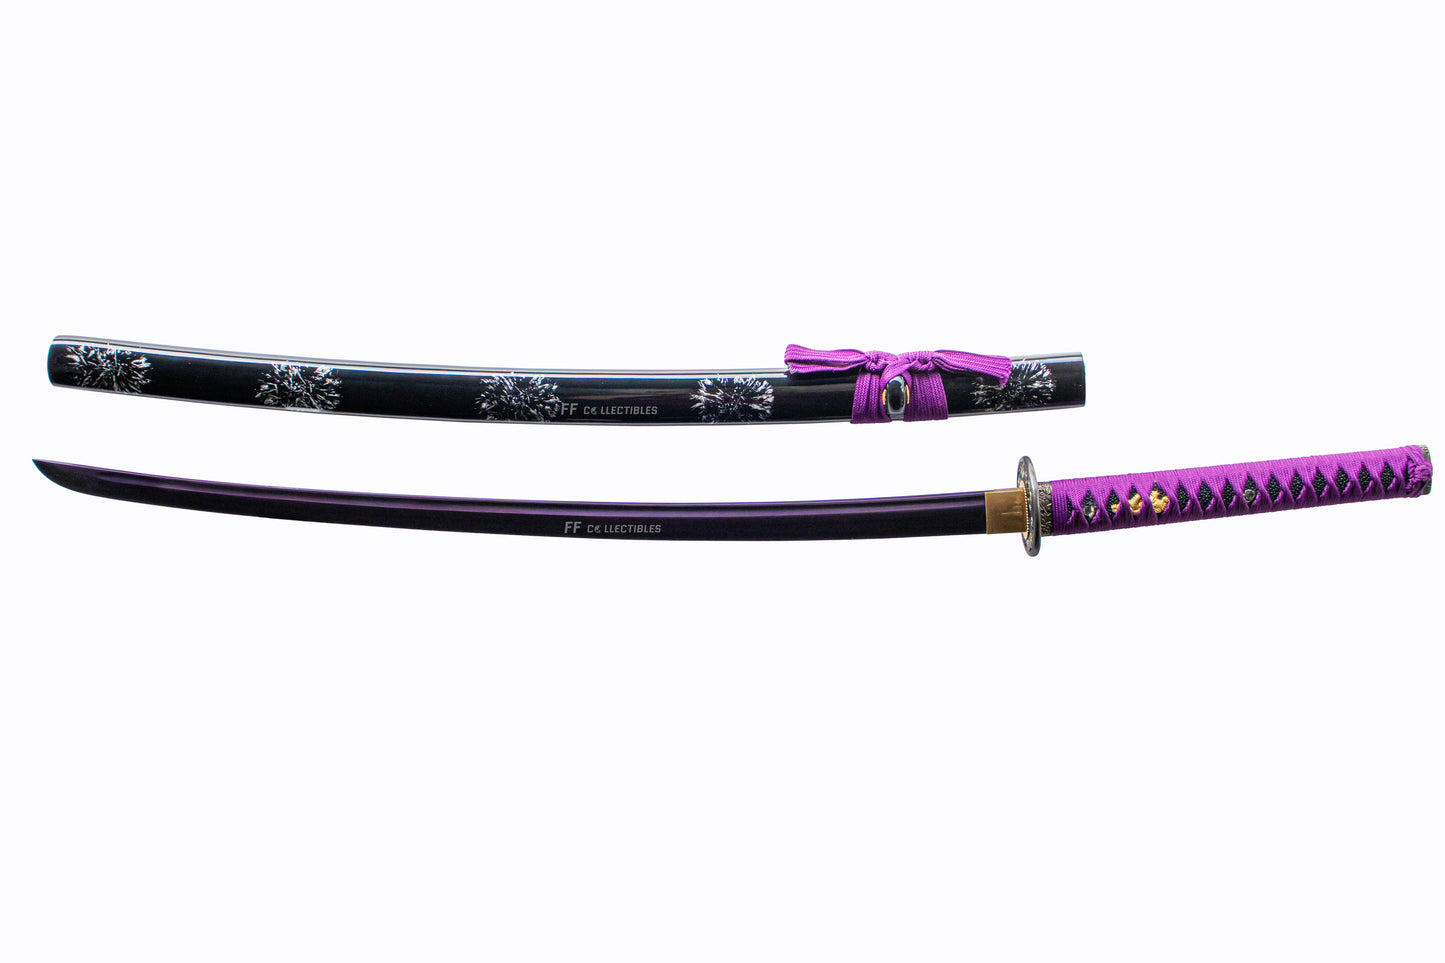 MURASAKI NO HANA, PURPLE FLOWER - HAND FORGED CARBON STEEL JAPANESE KATANA (with FREE sword stand)